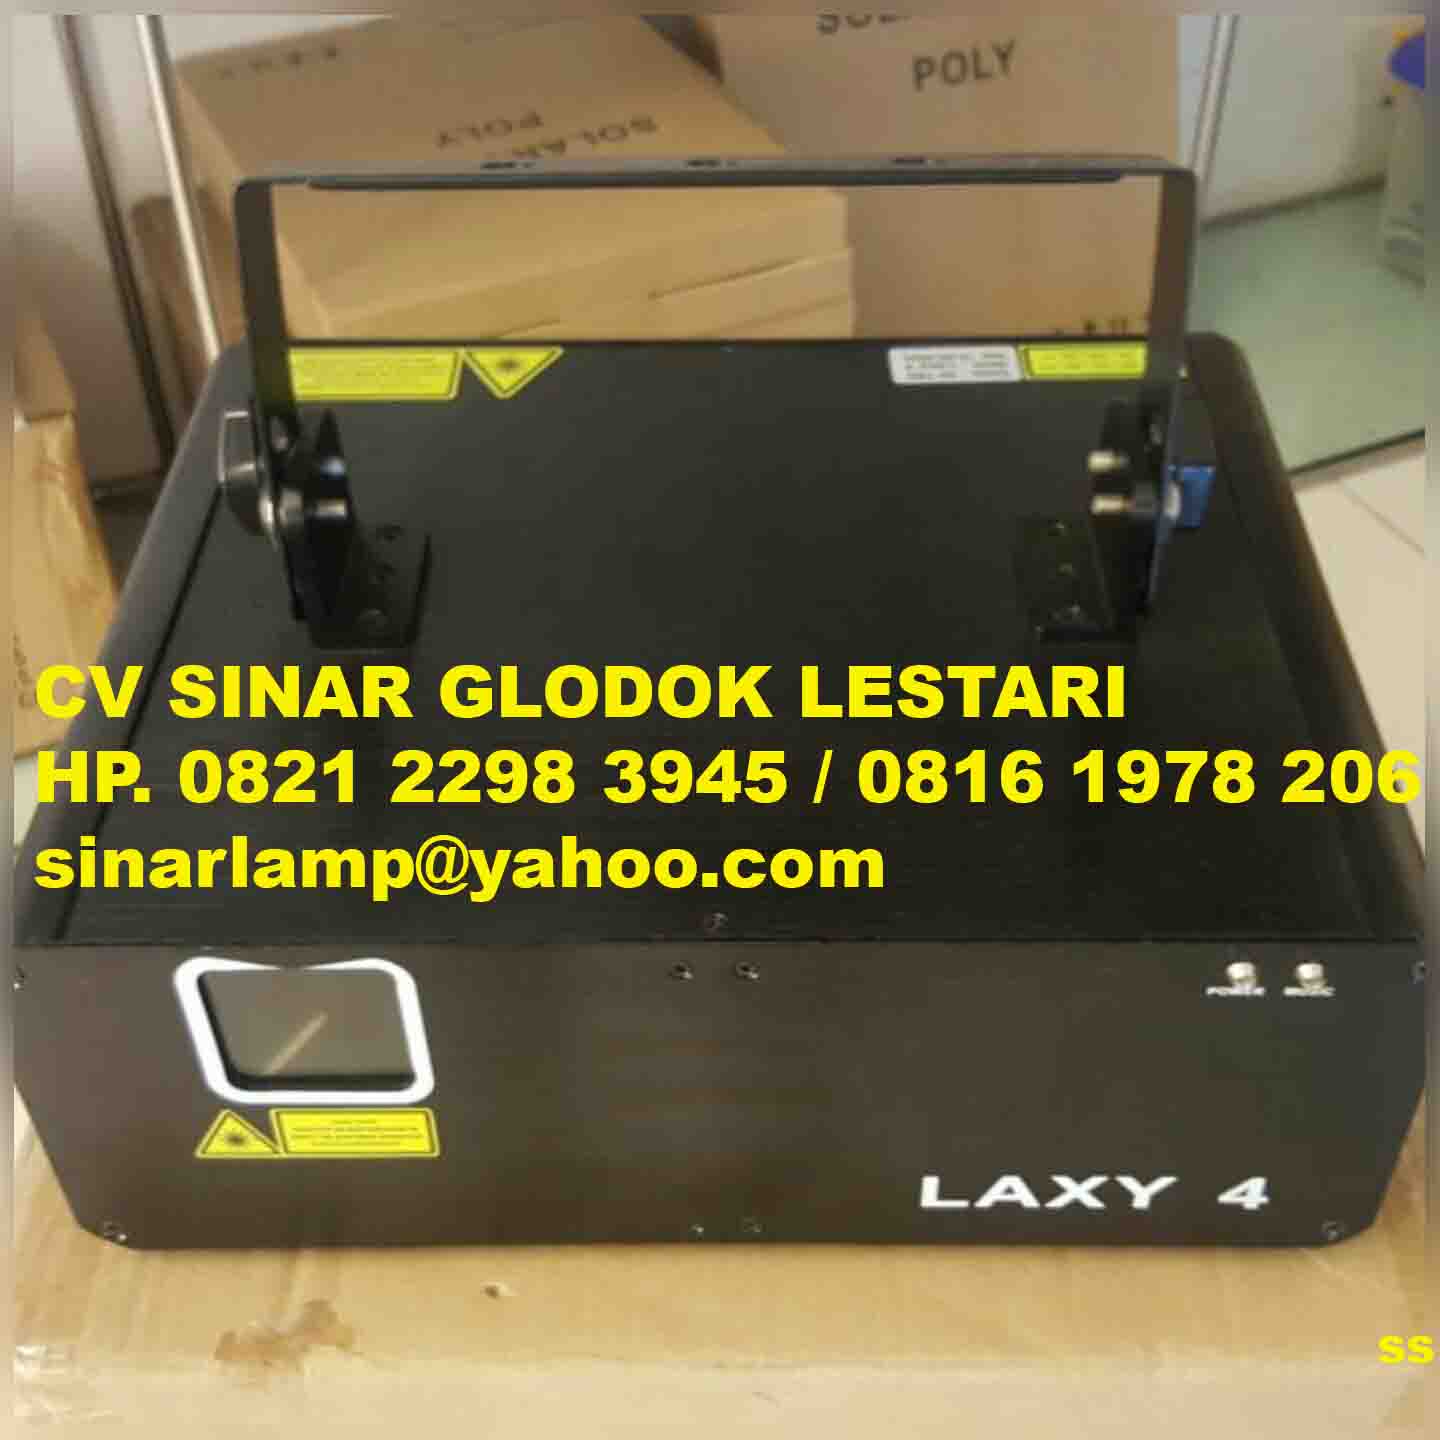 Lampu Laser RGB Laxy 4